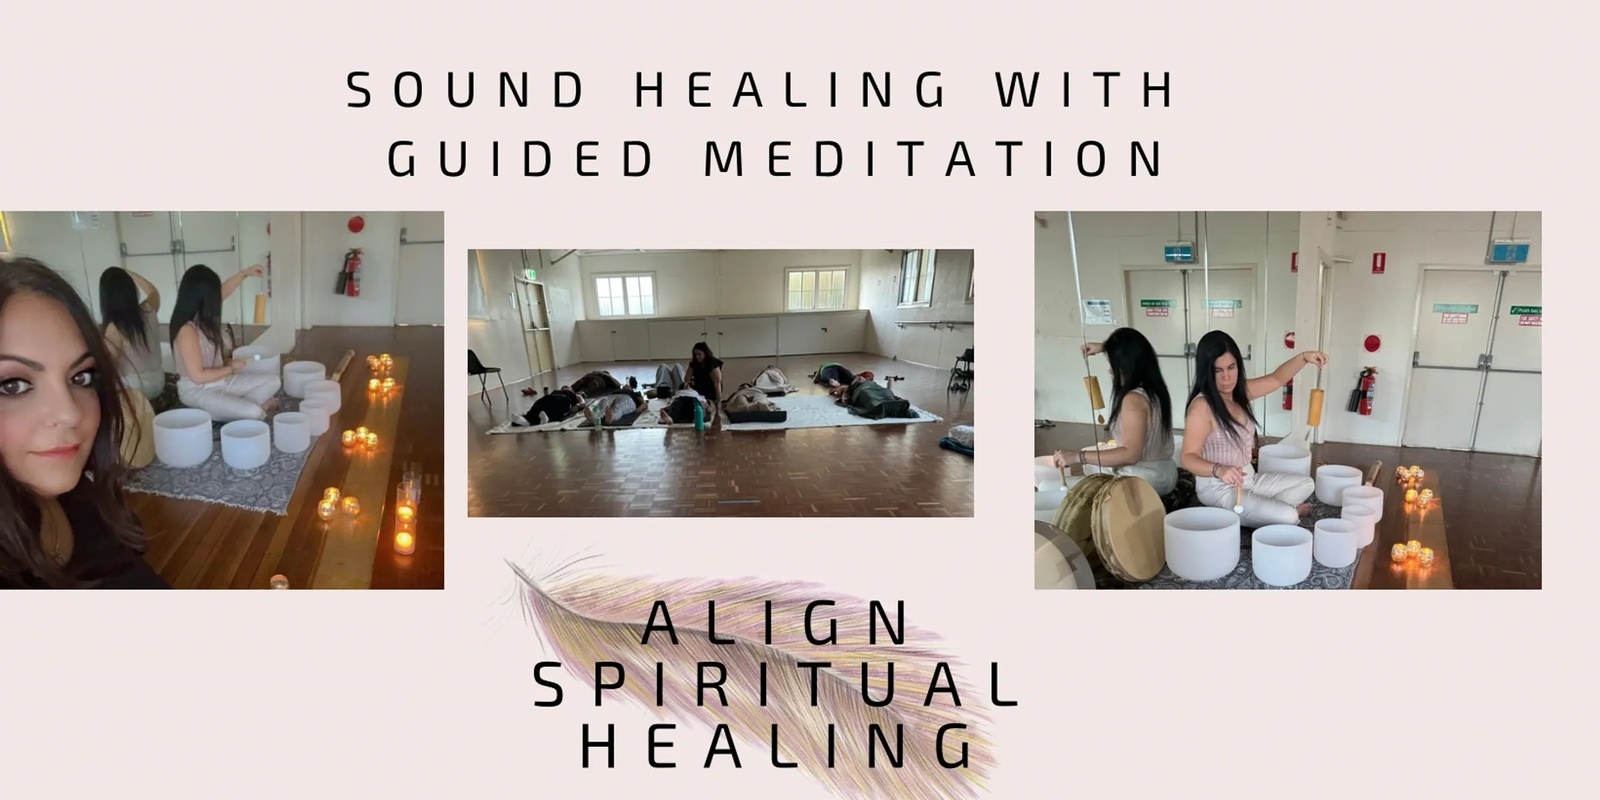 Inner Balance and Harmony Meditation, Guided Meditation with Olivia